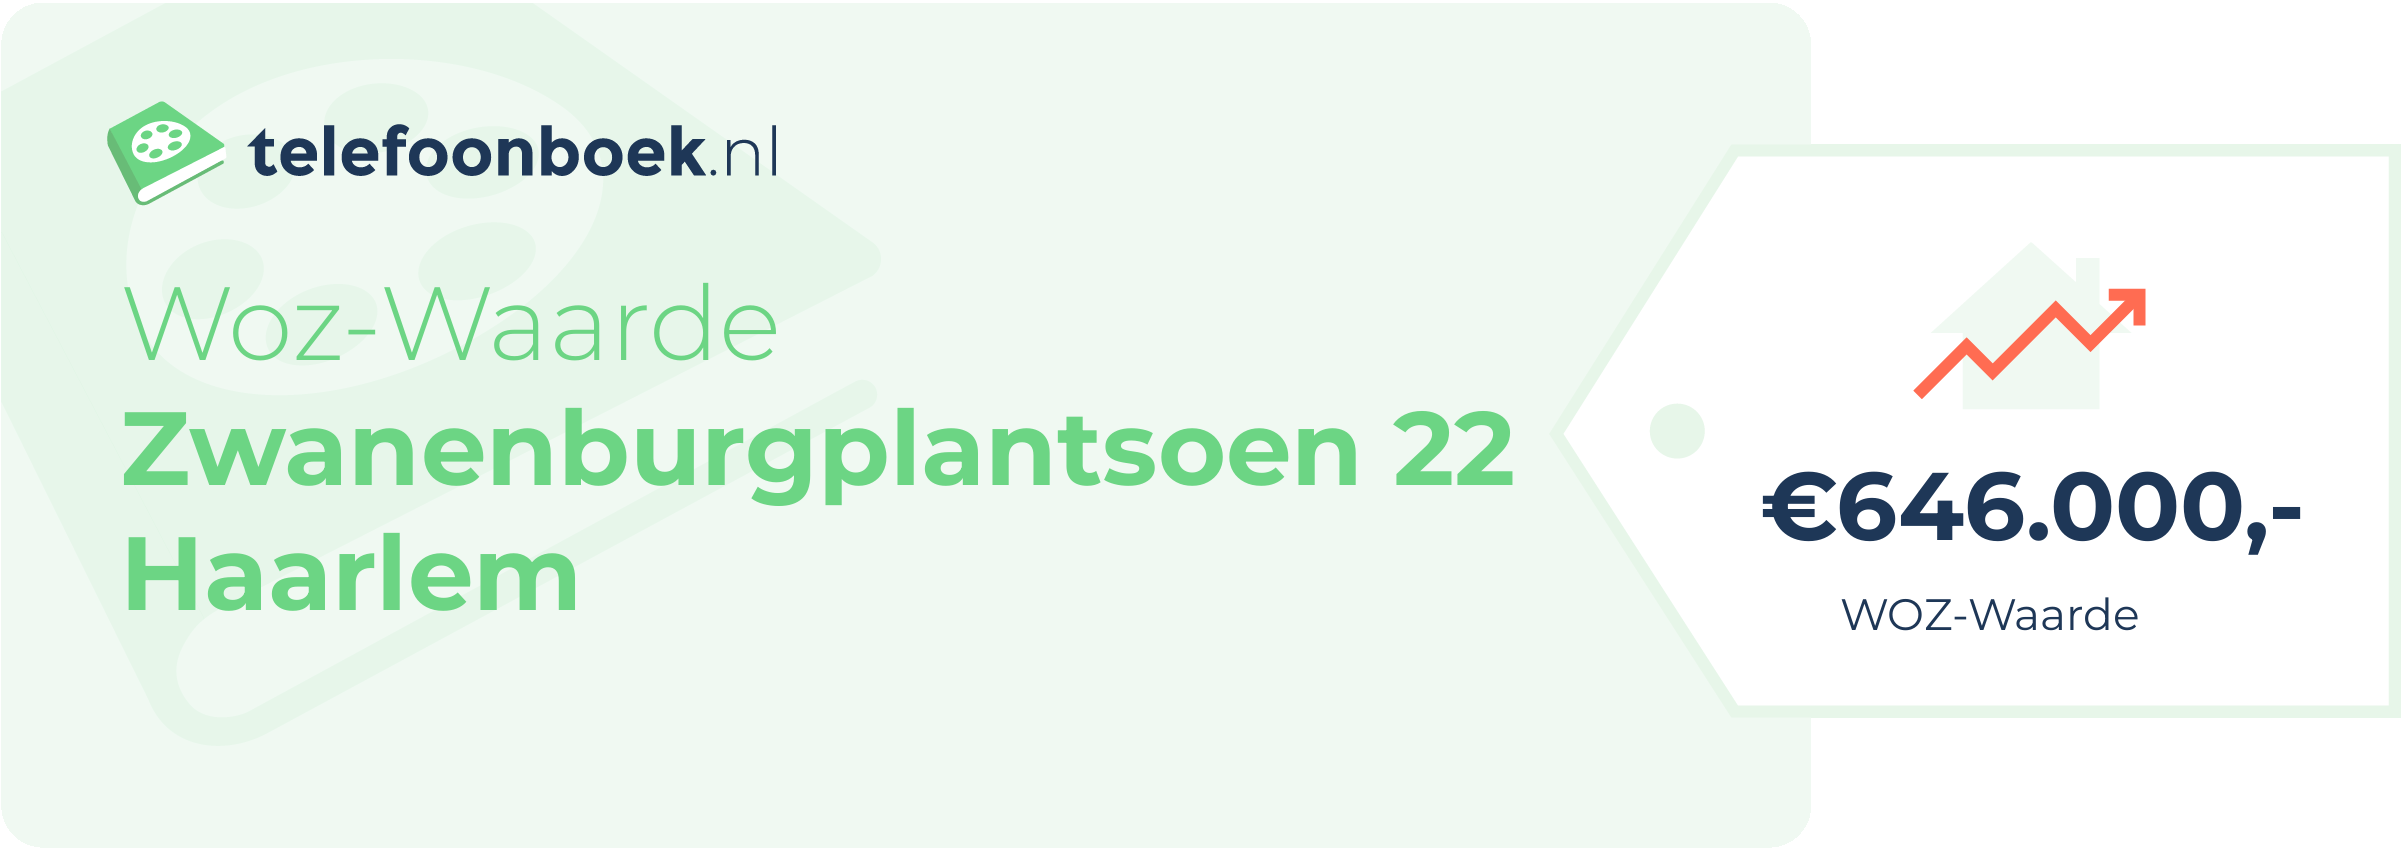 WOZ-waarde Zwanenburgplantsoen 22 Haarlem